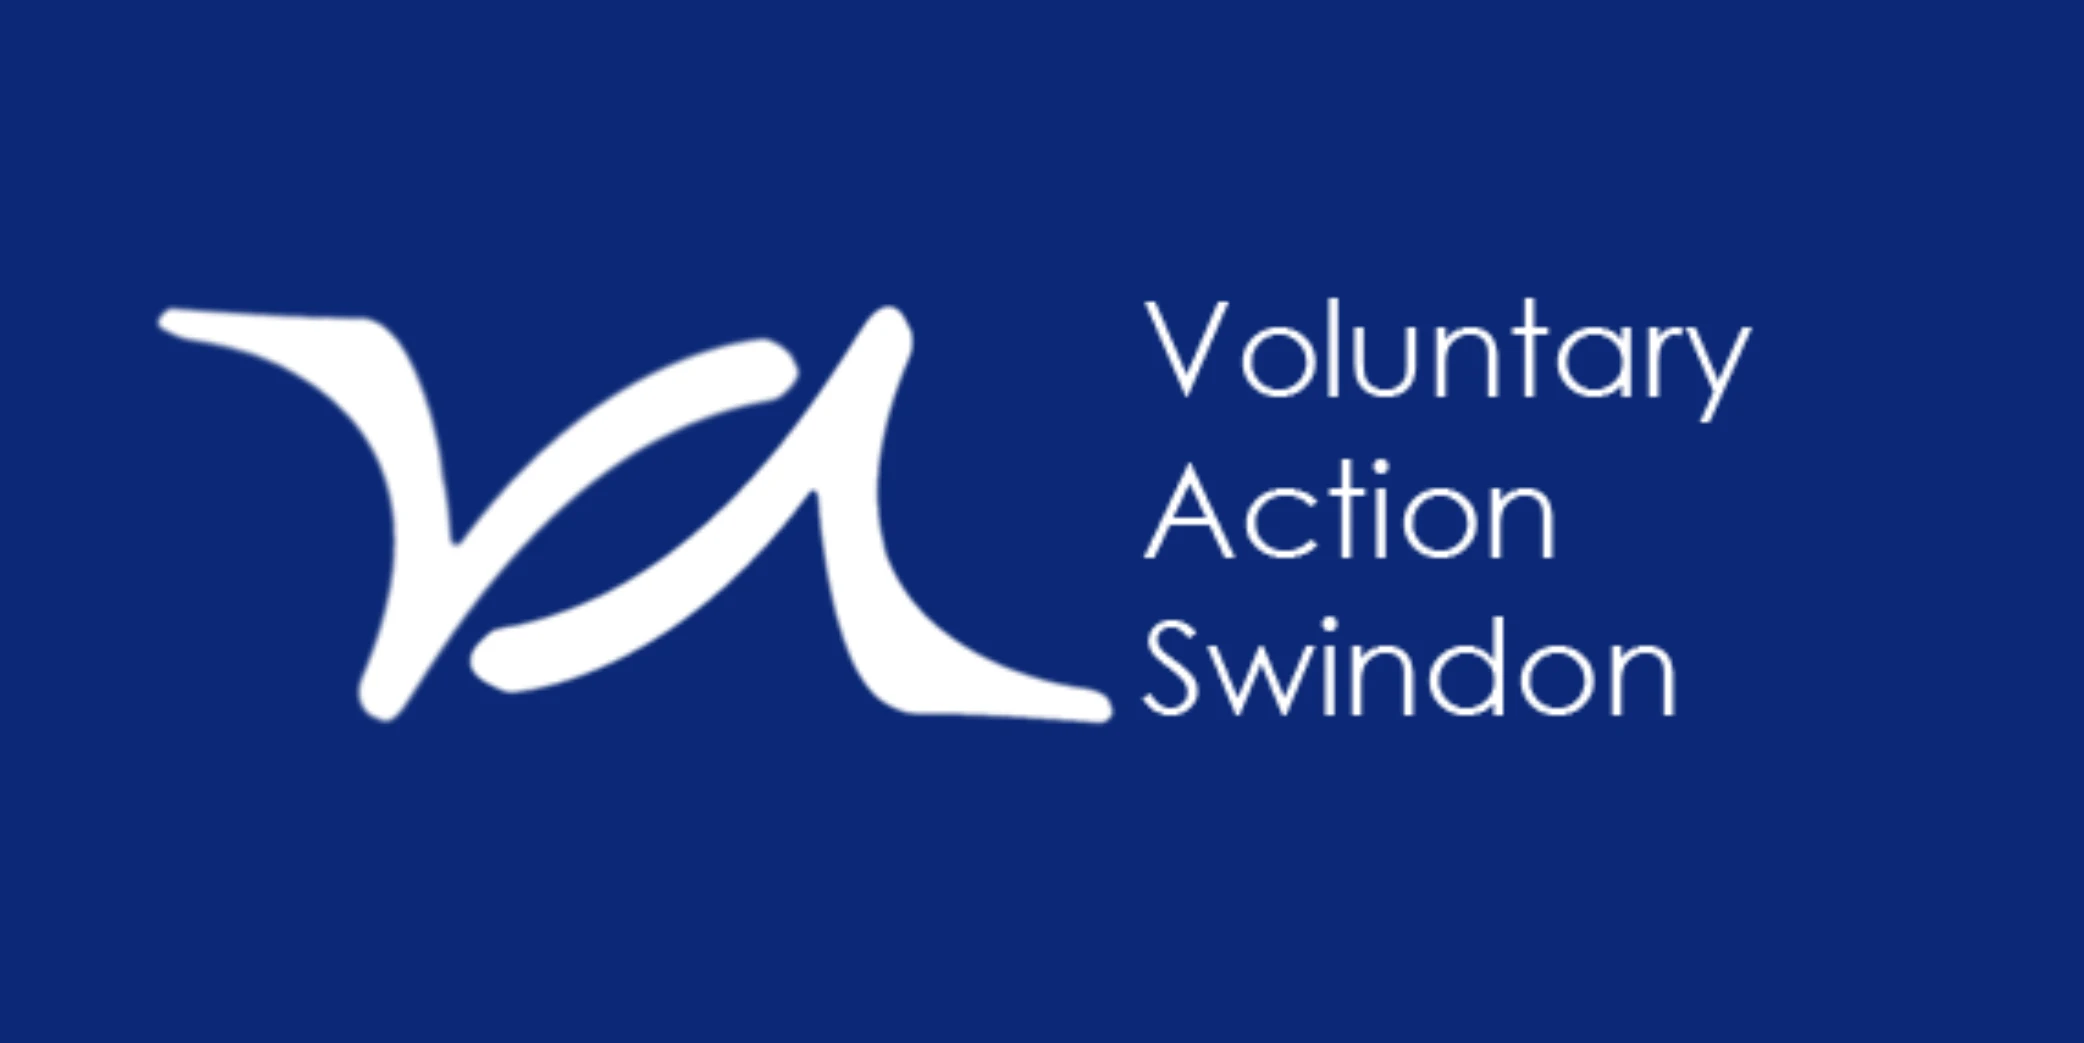 Voluntary Action Swindon